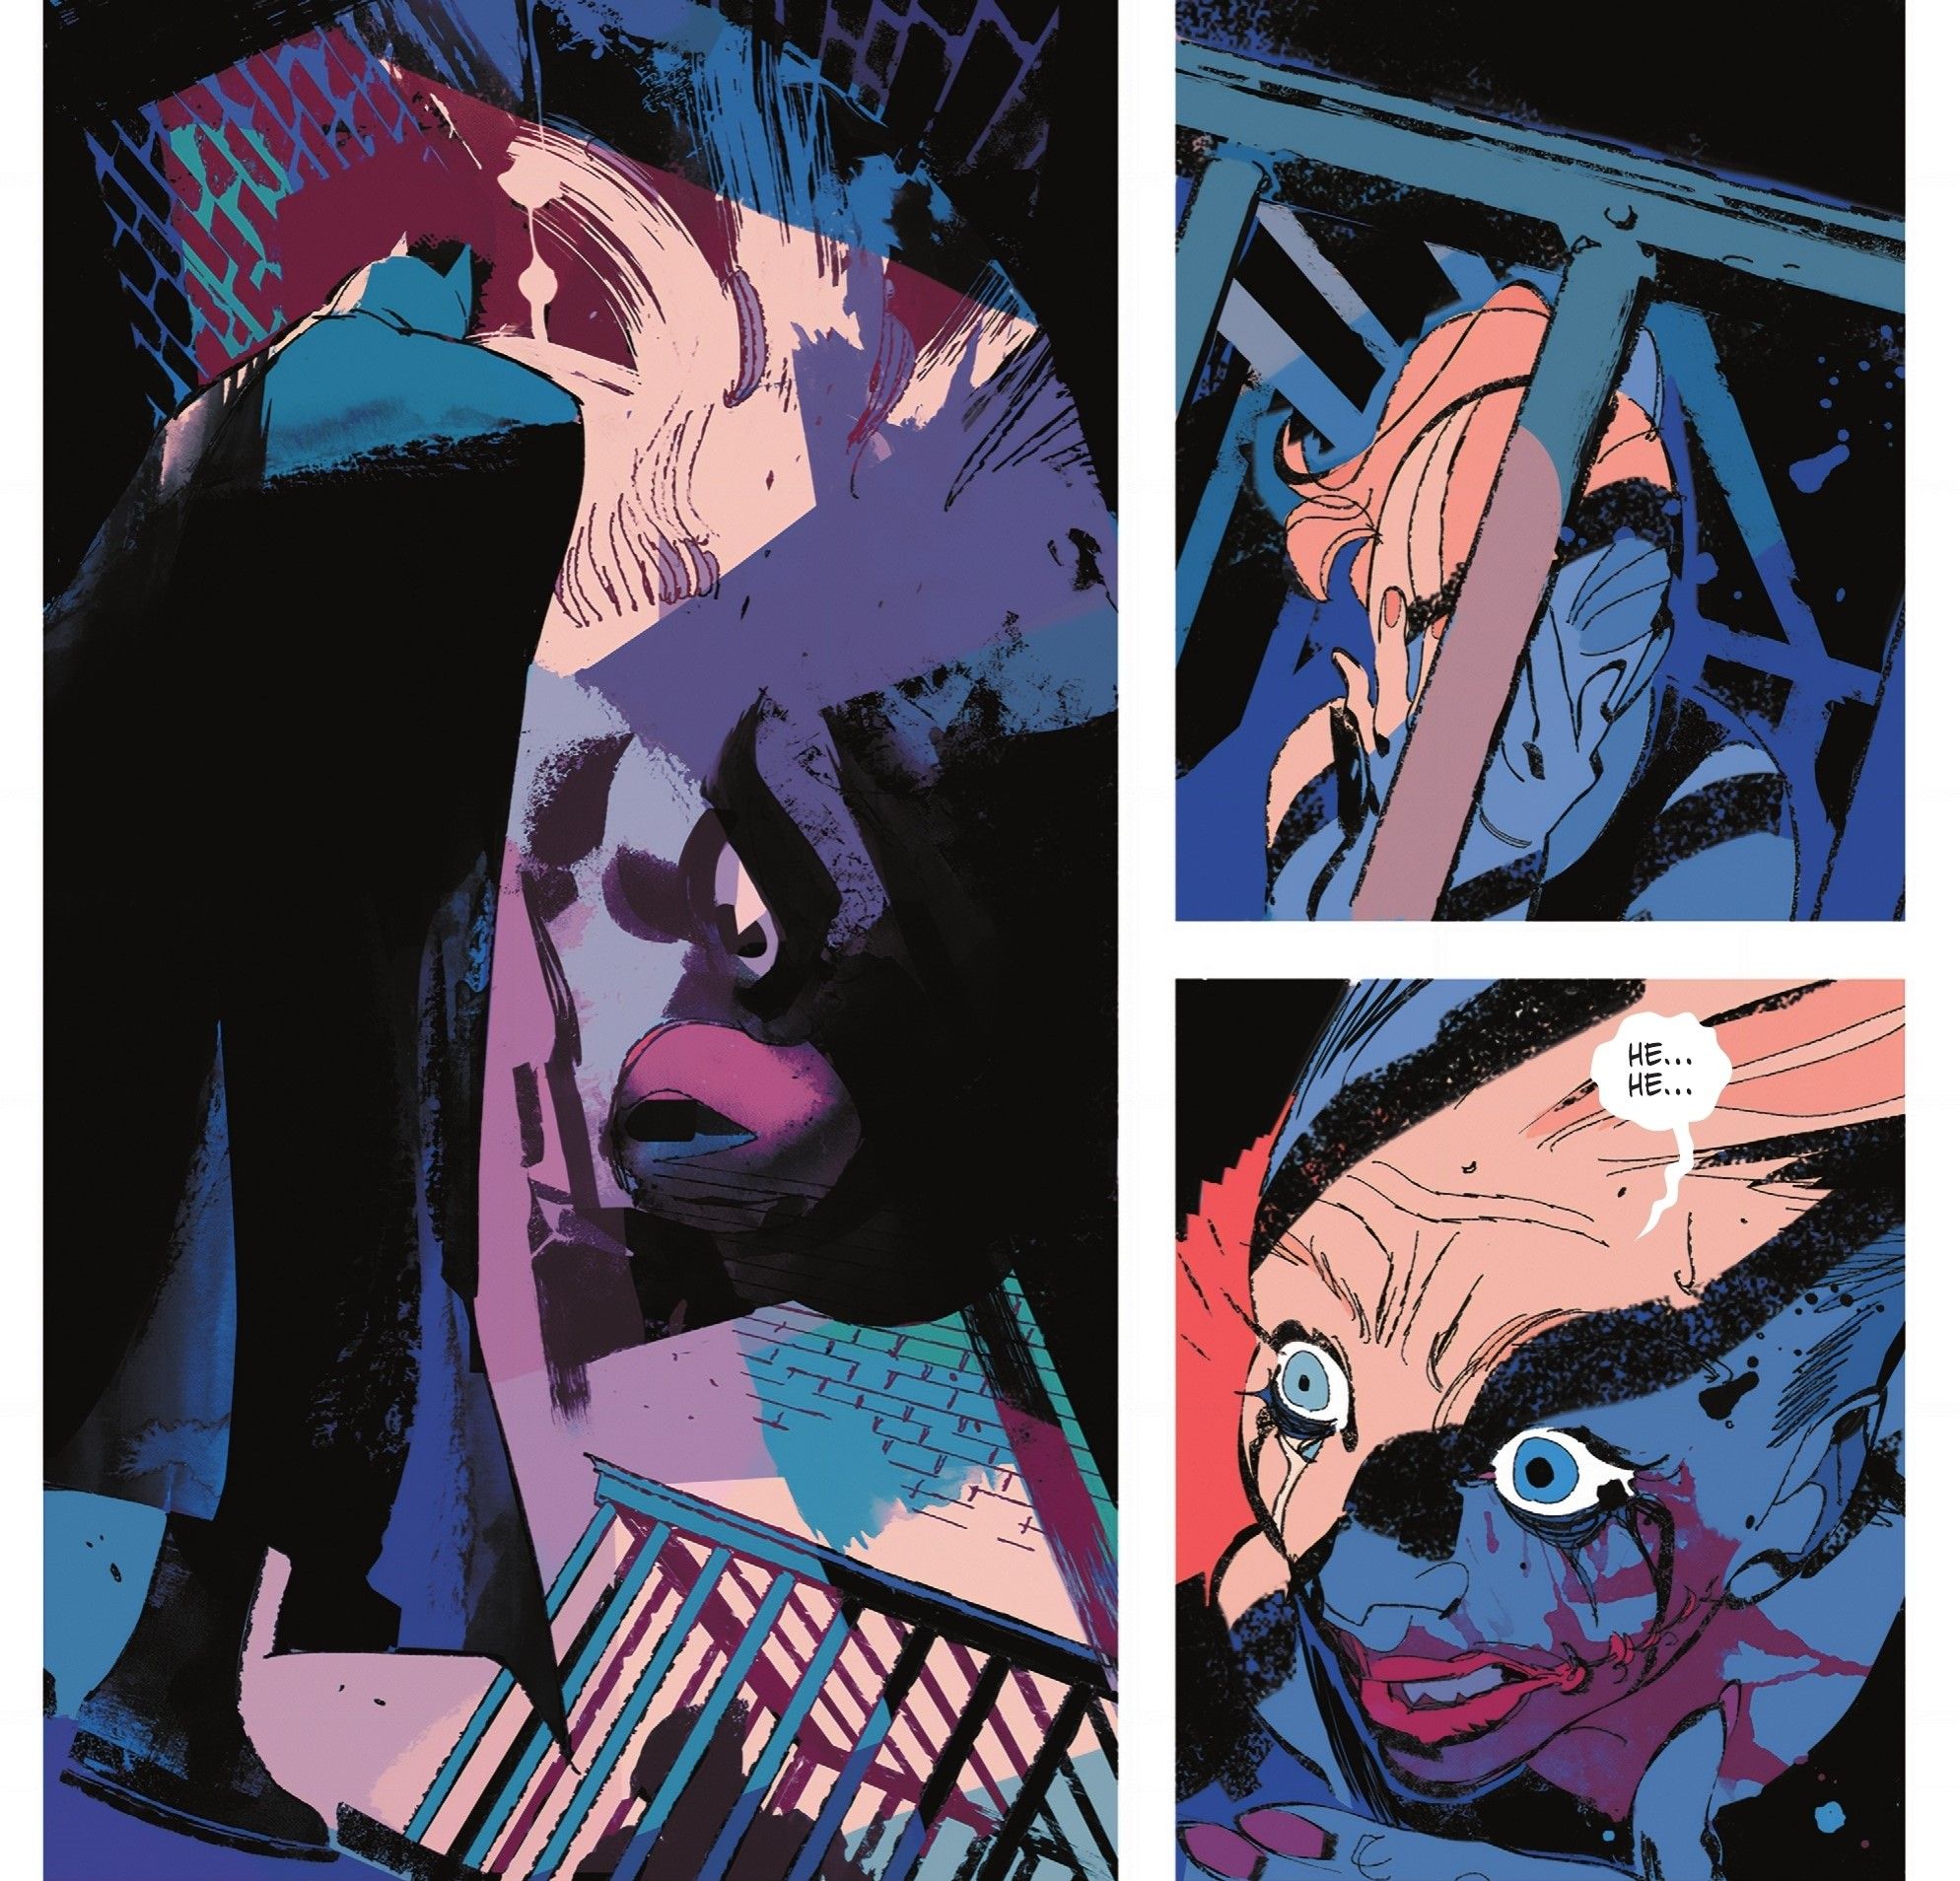 BAtman Dylan Dog #1 featuring batman and mutilated girl